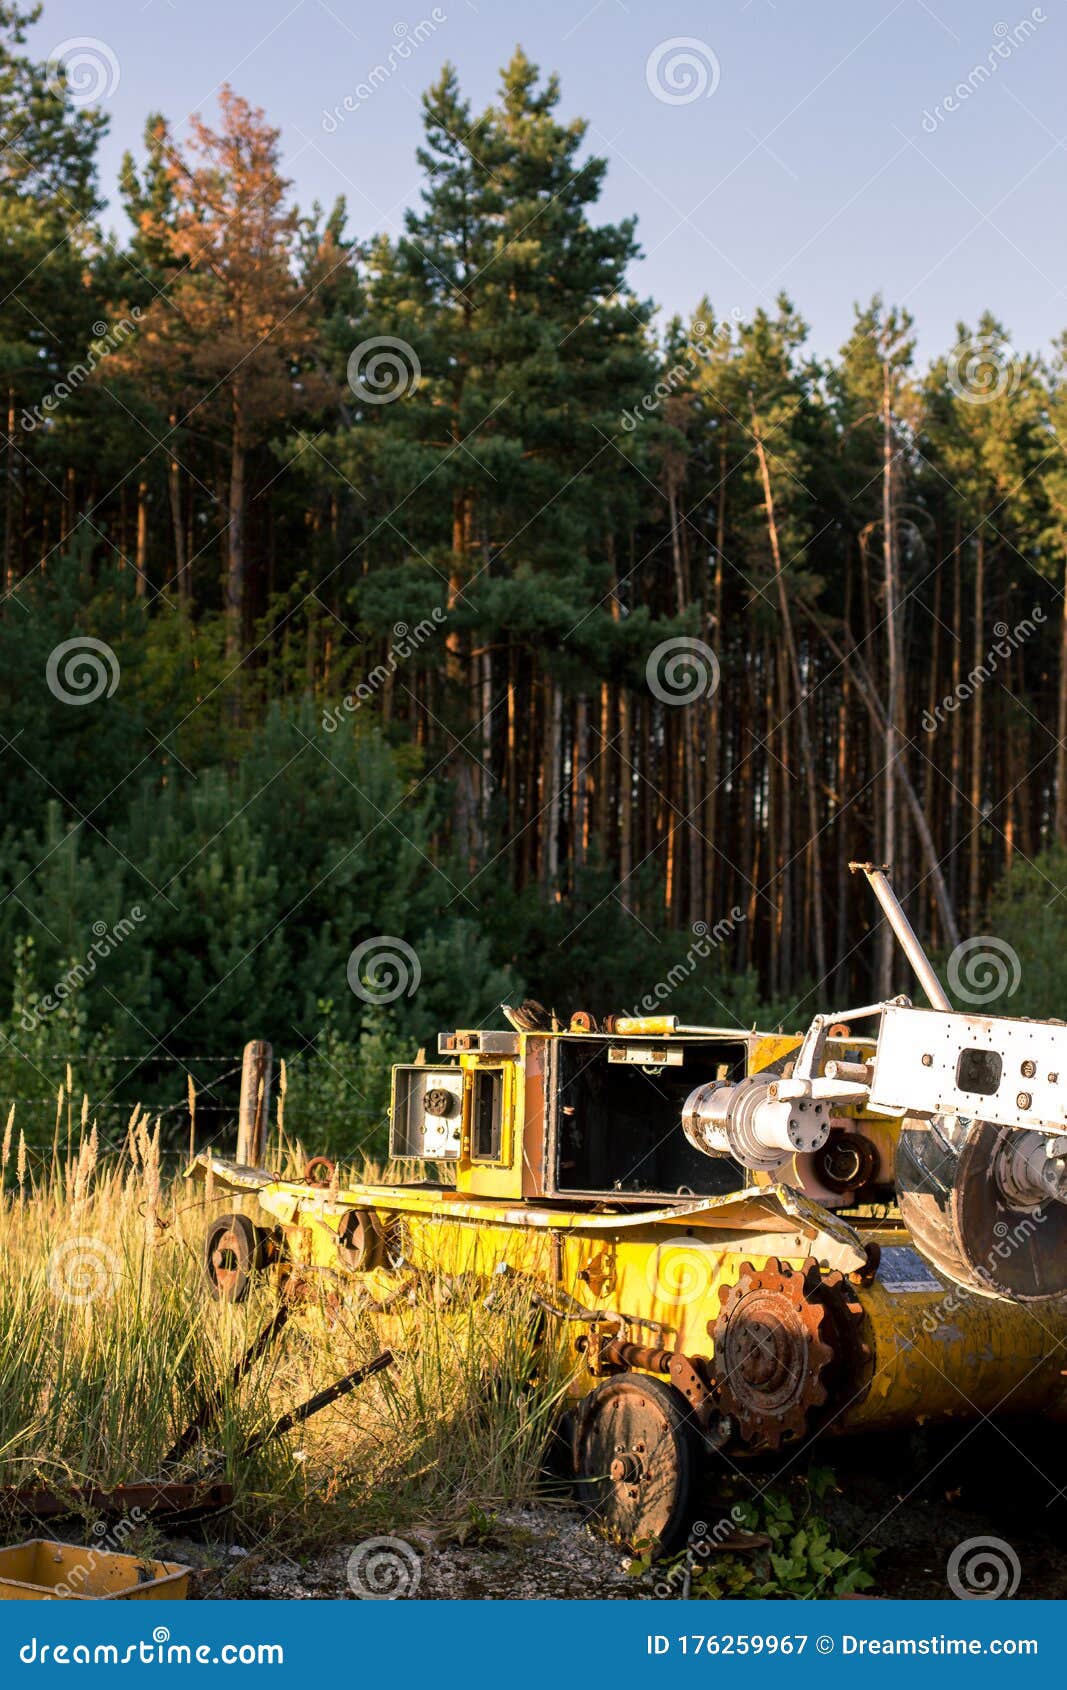 Military Vehicle in Buryakivka Graveyard Chernobyl Exclusion Zone Editorial Photography - Image of graveyard, radar: